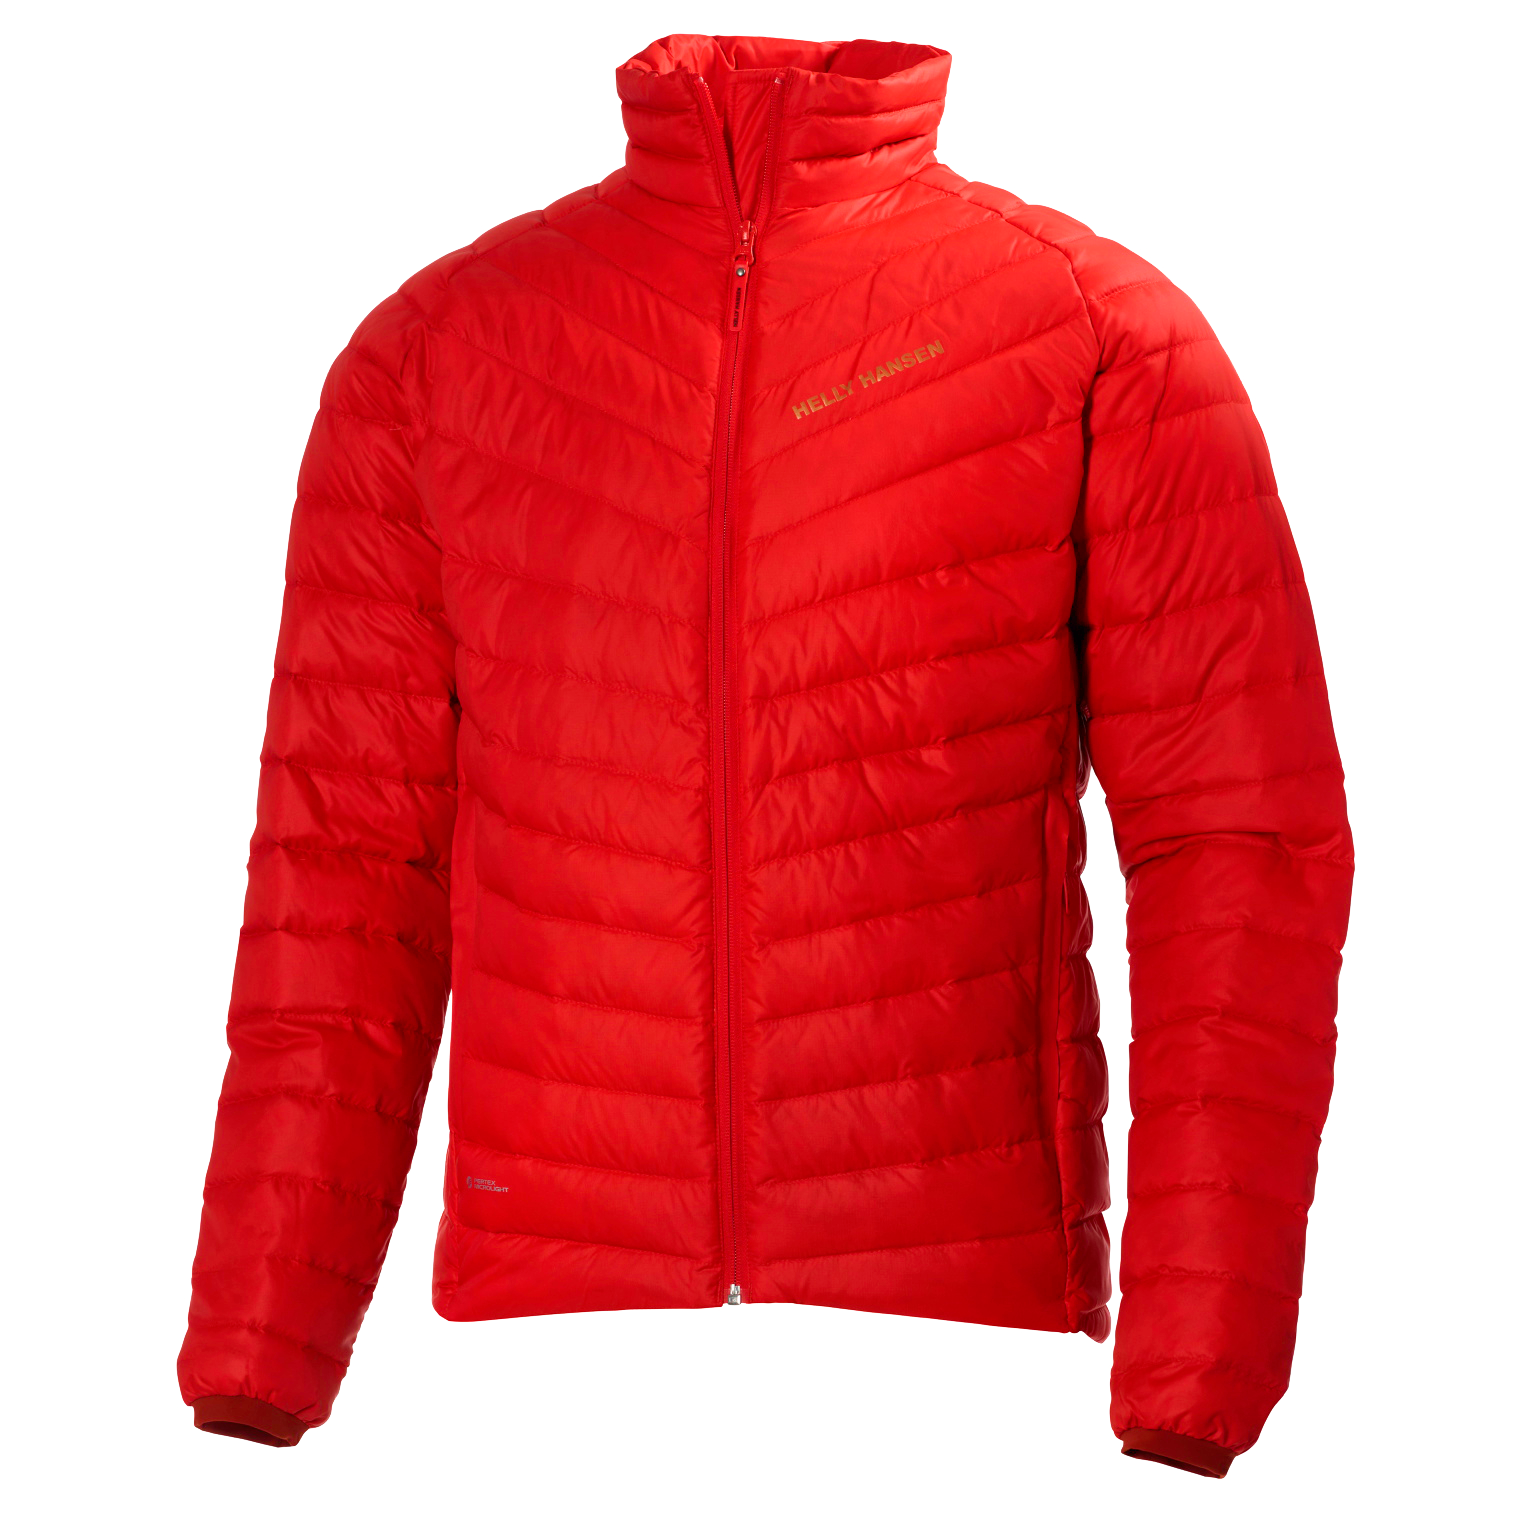 Red jacket PNG image